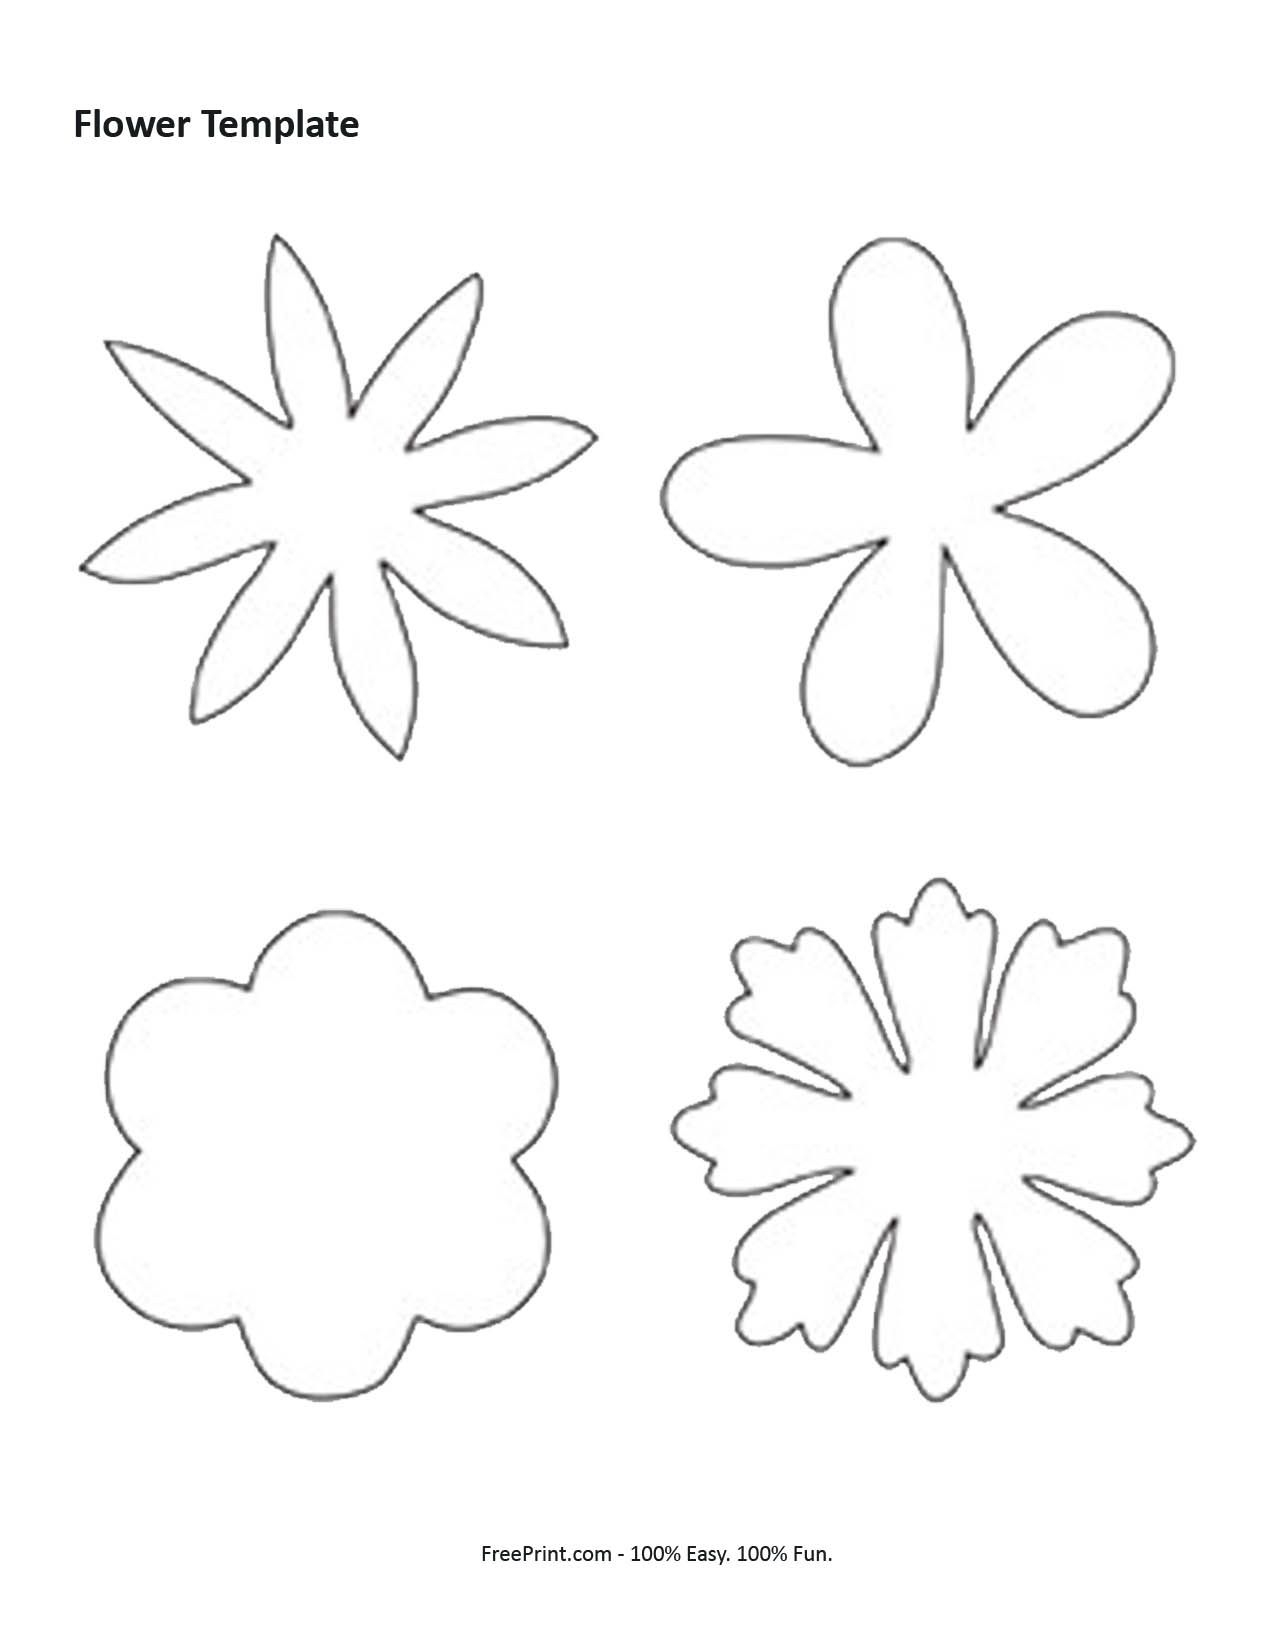 Felt Flower Template | Diy And Crafts | Flower Template, Felt - Free Printable Flower Template